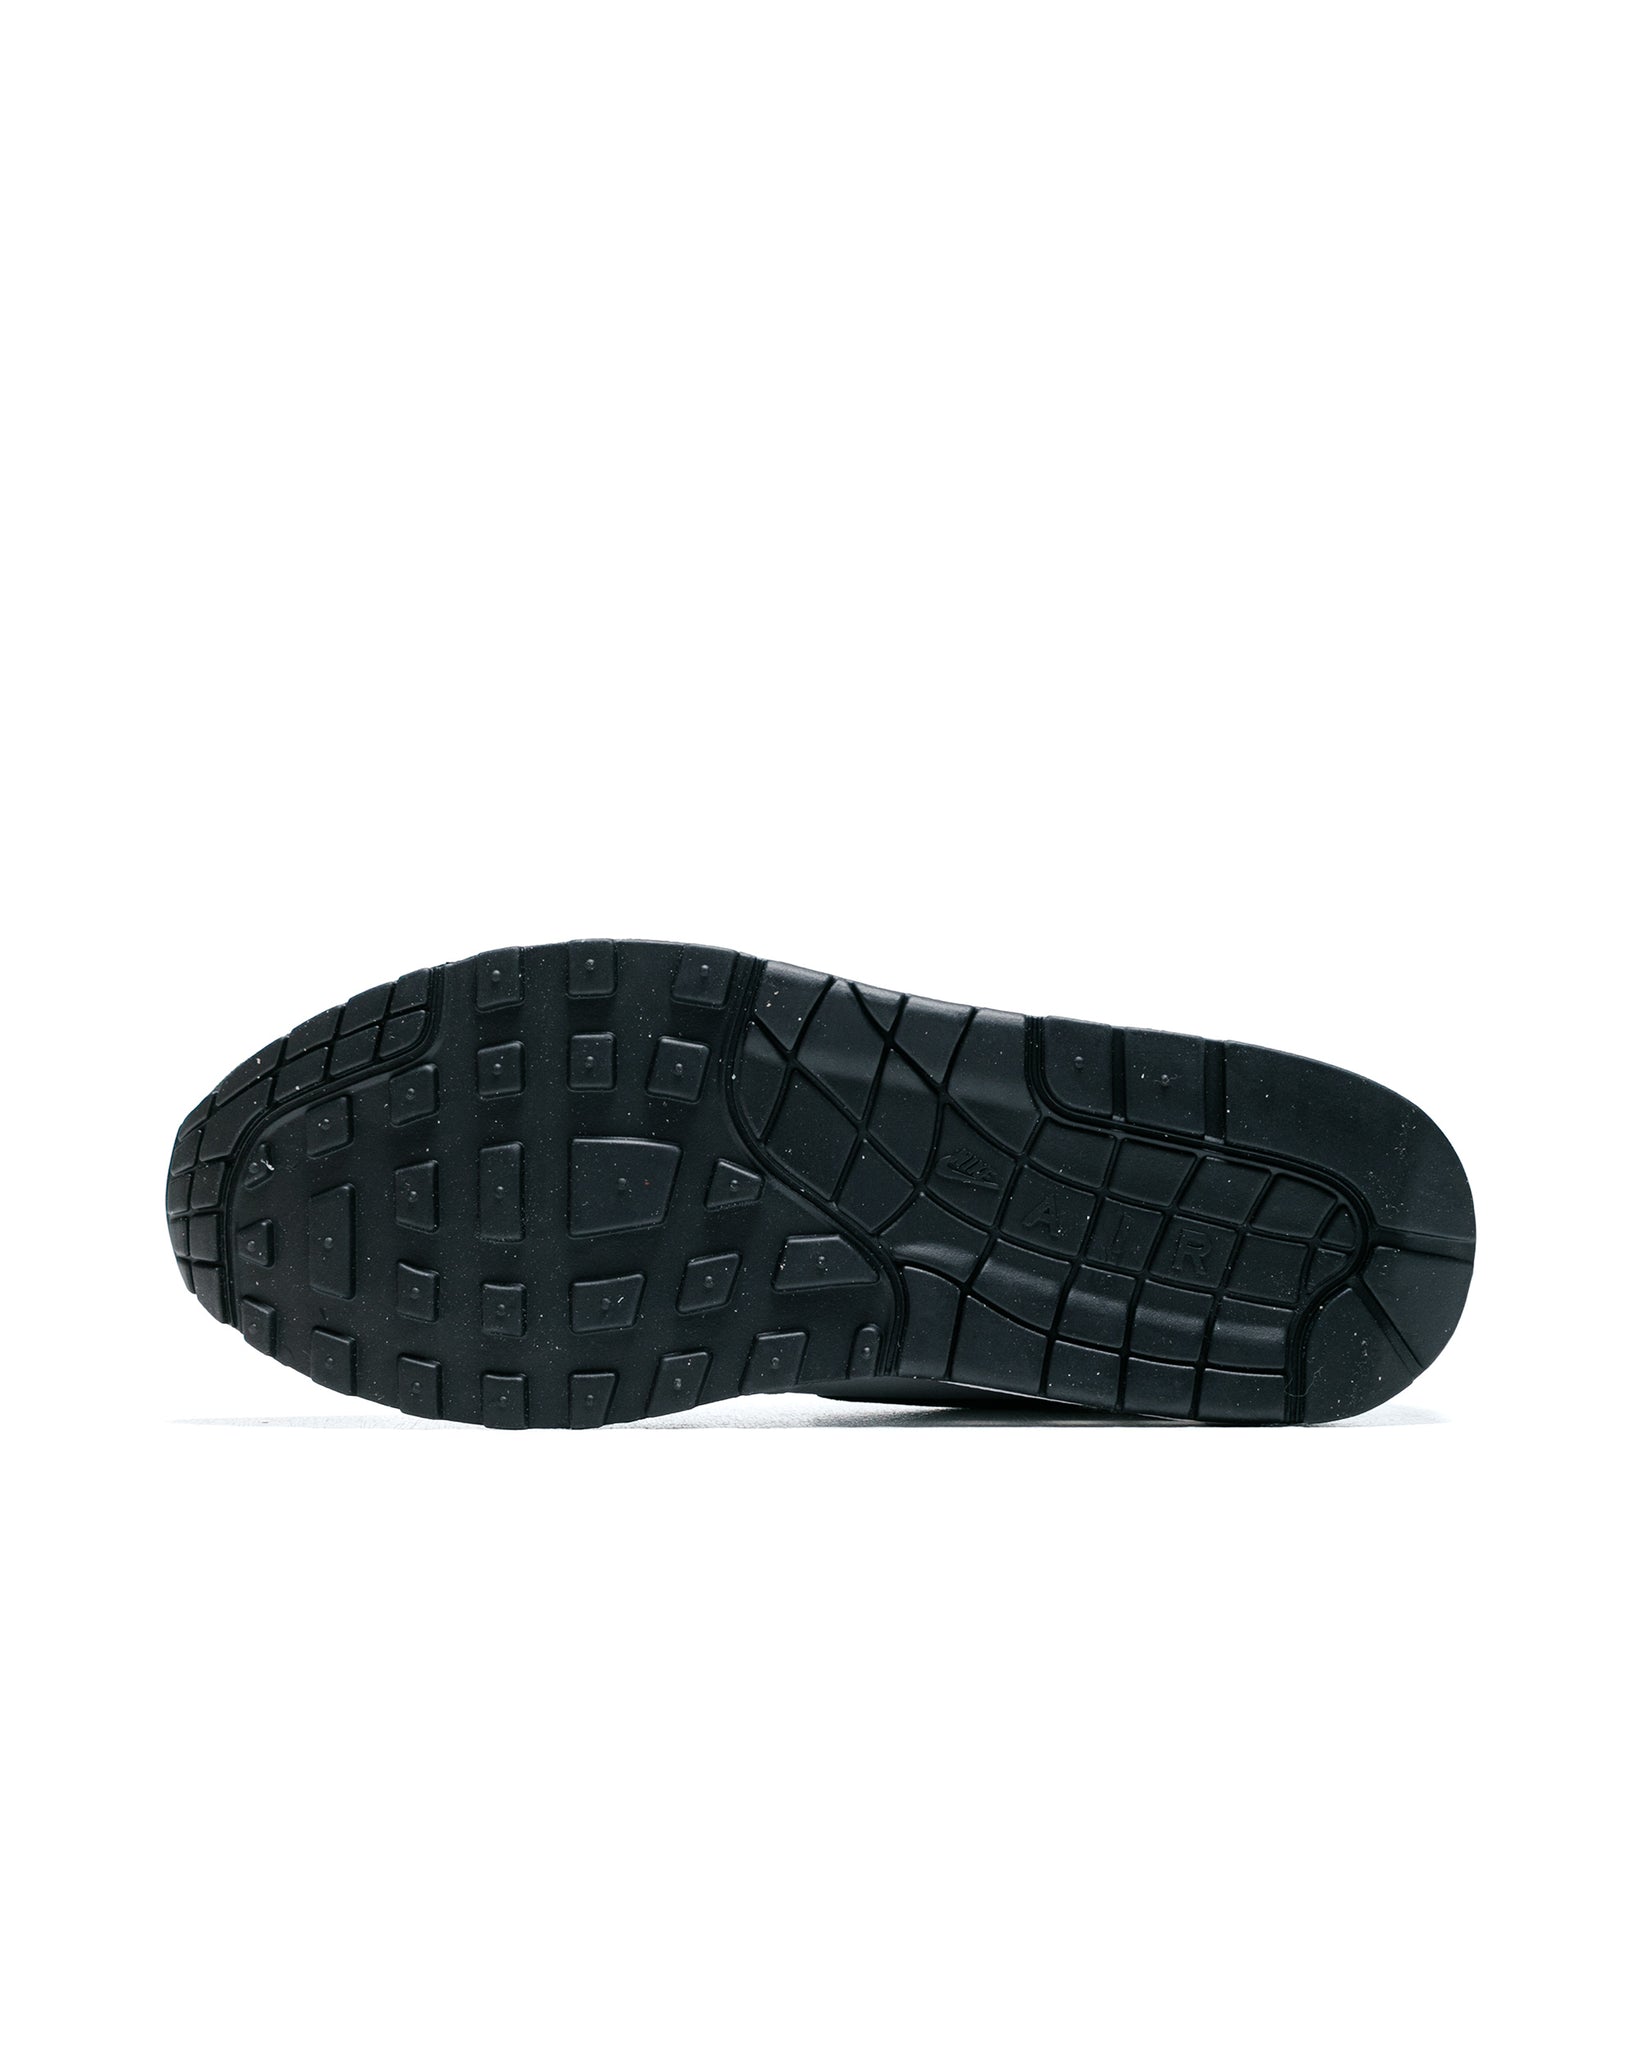 Nike Air Max 1 WhiteBlack sole